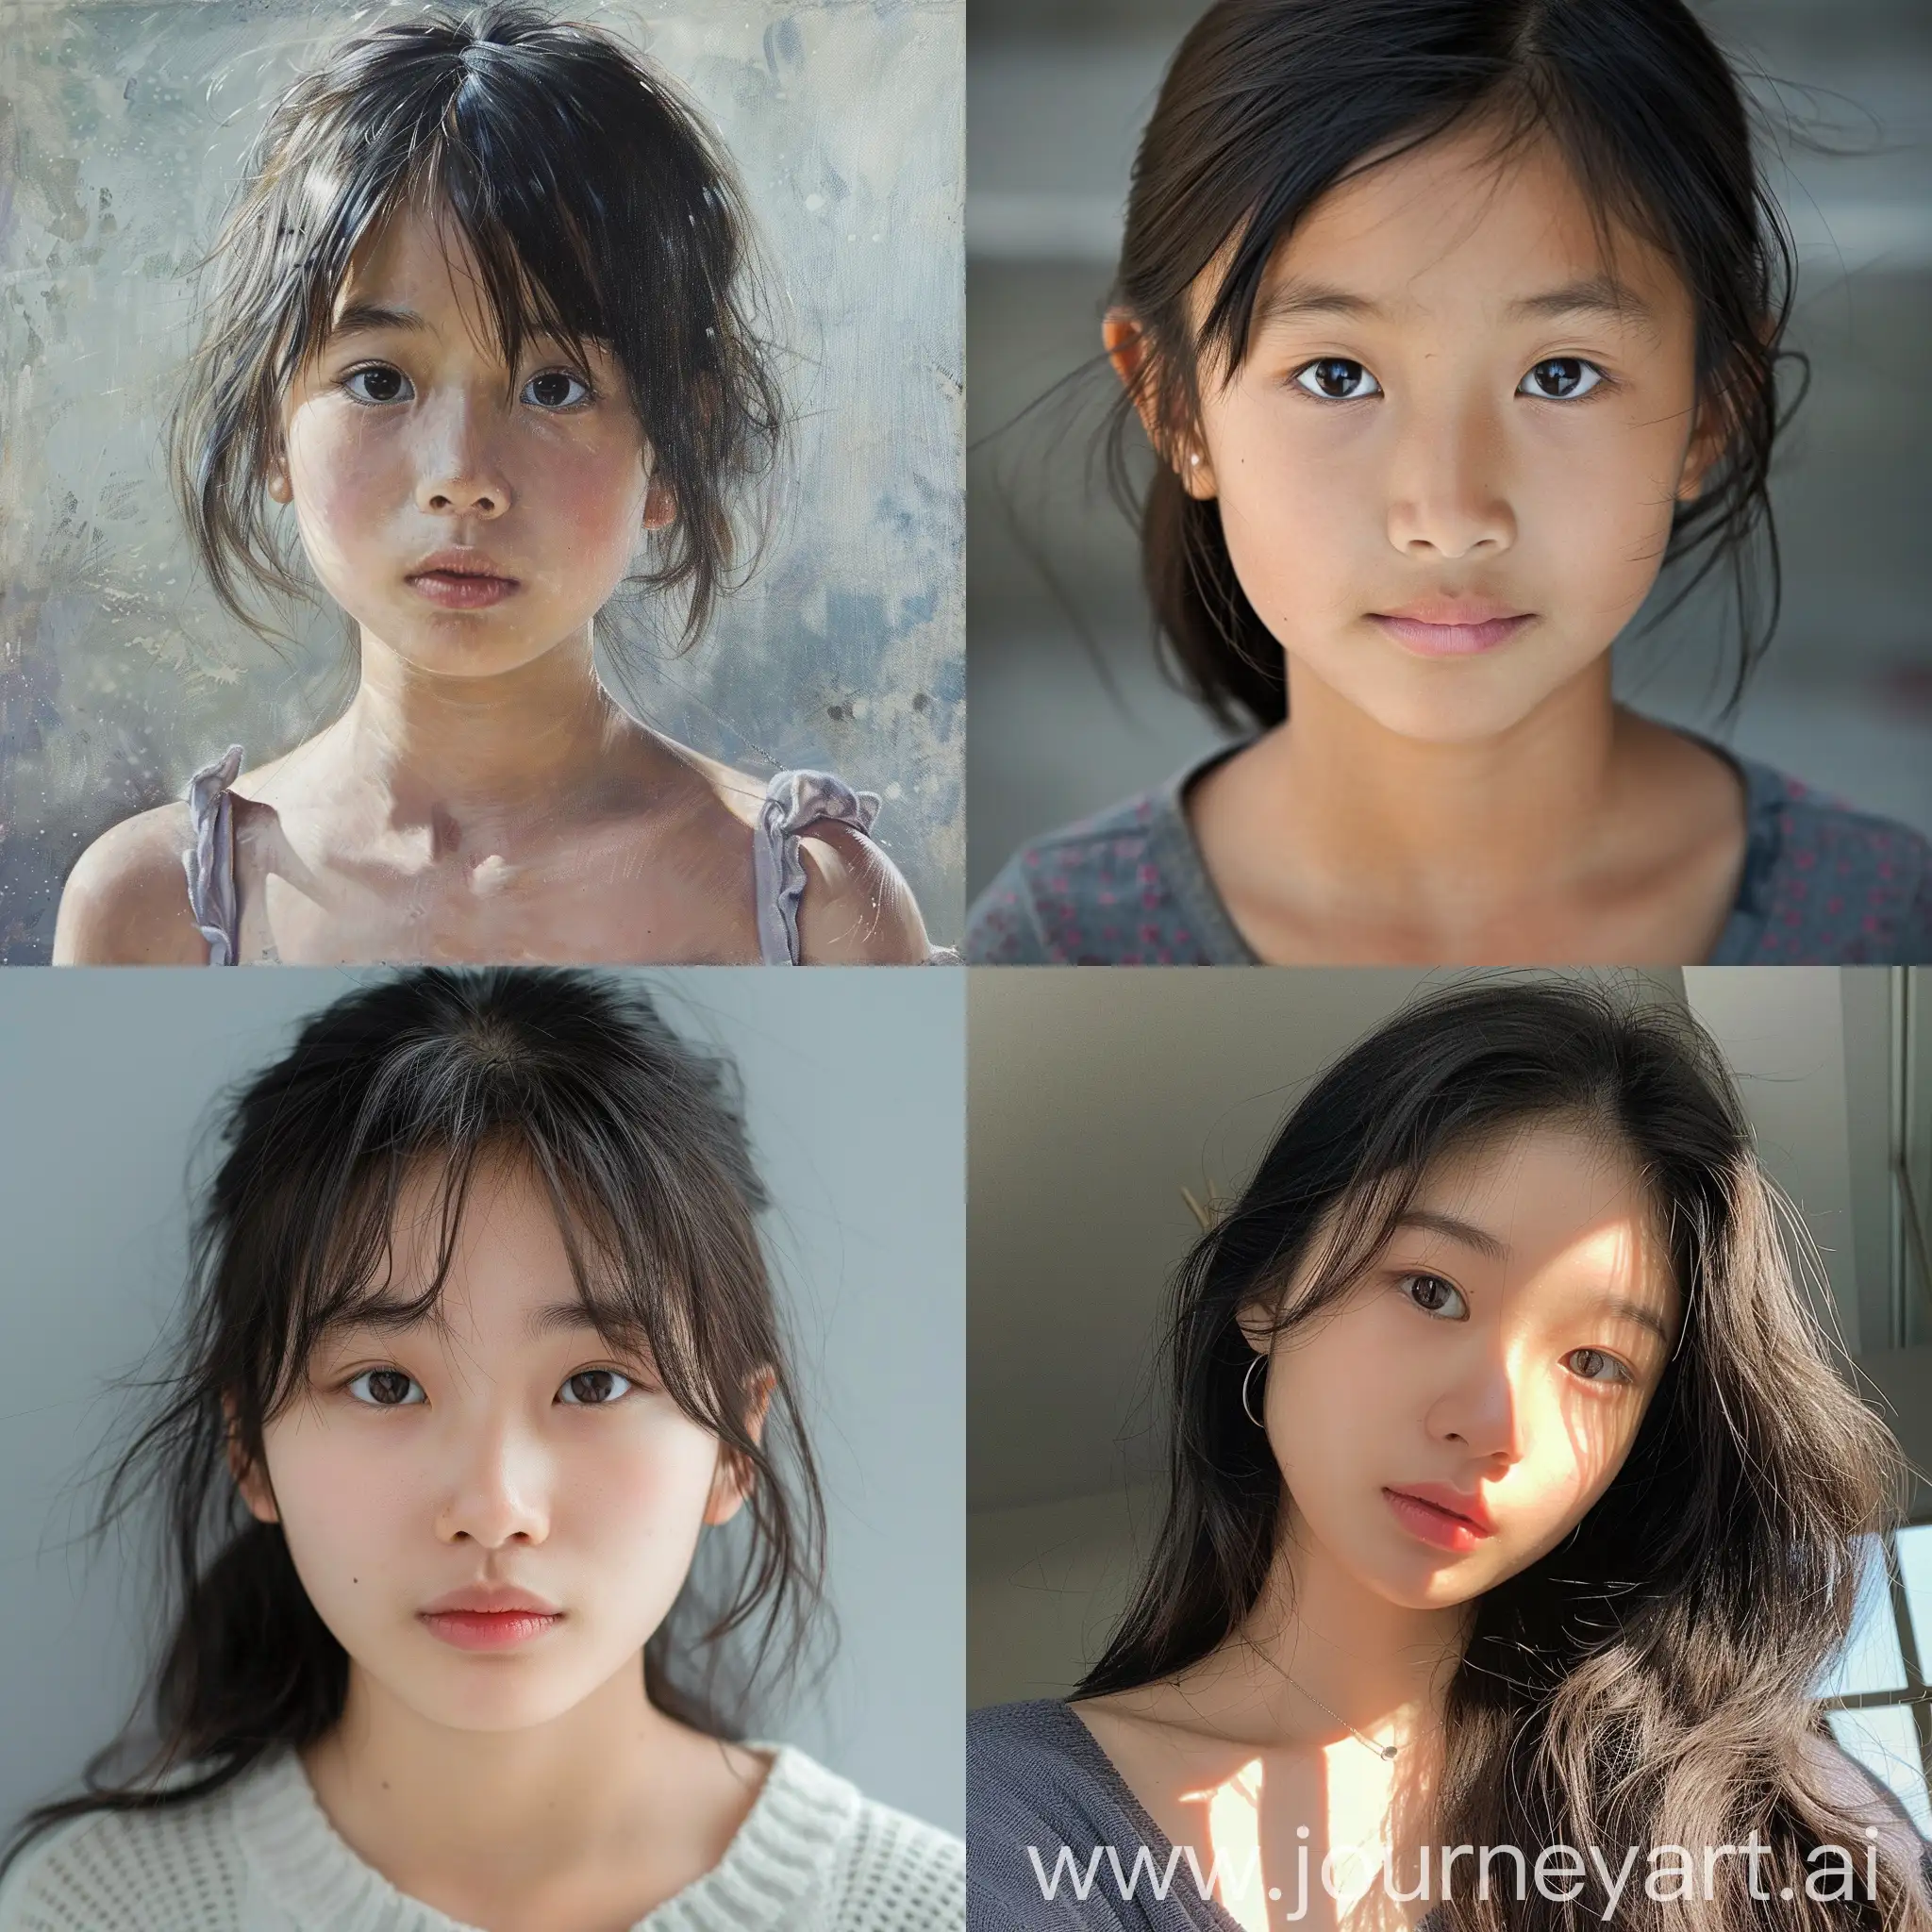 Young Asian girl